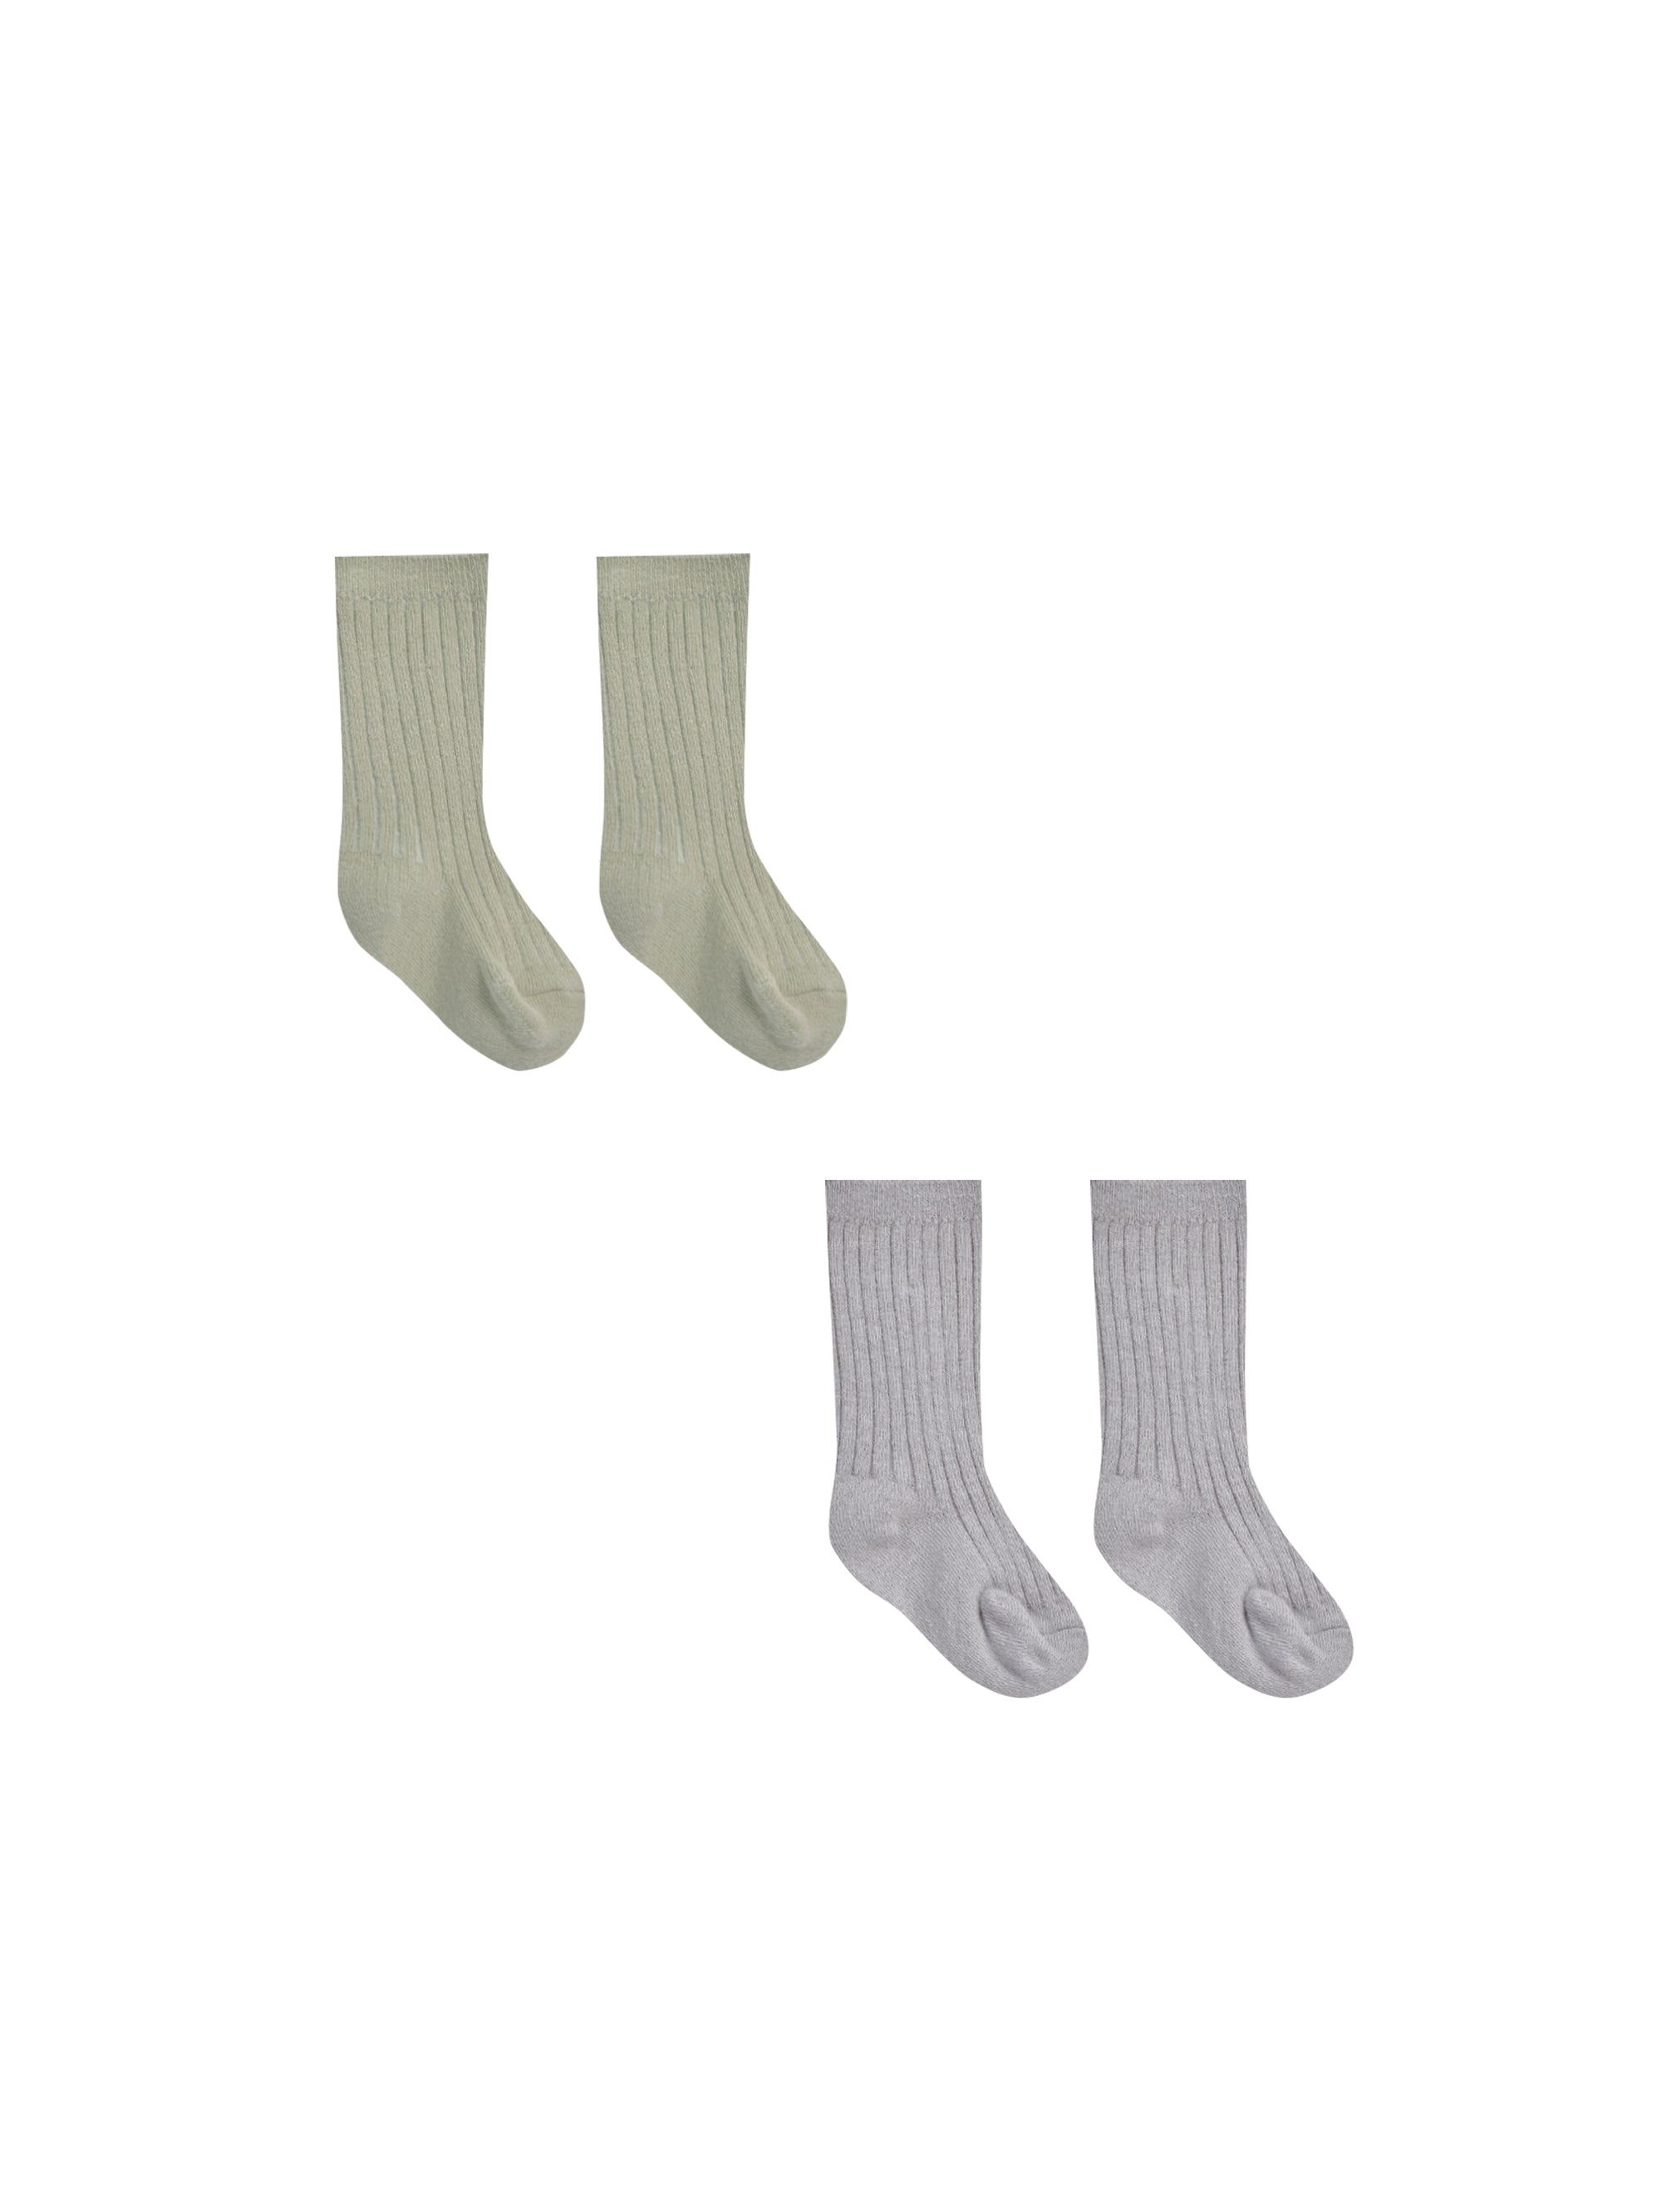 Socks Set of 2 || Sage + Periwinkle